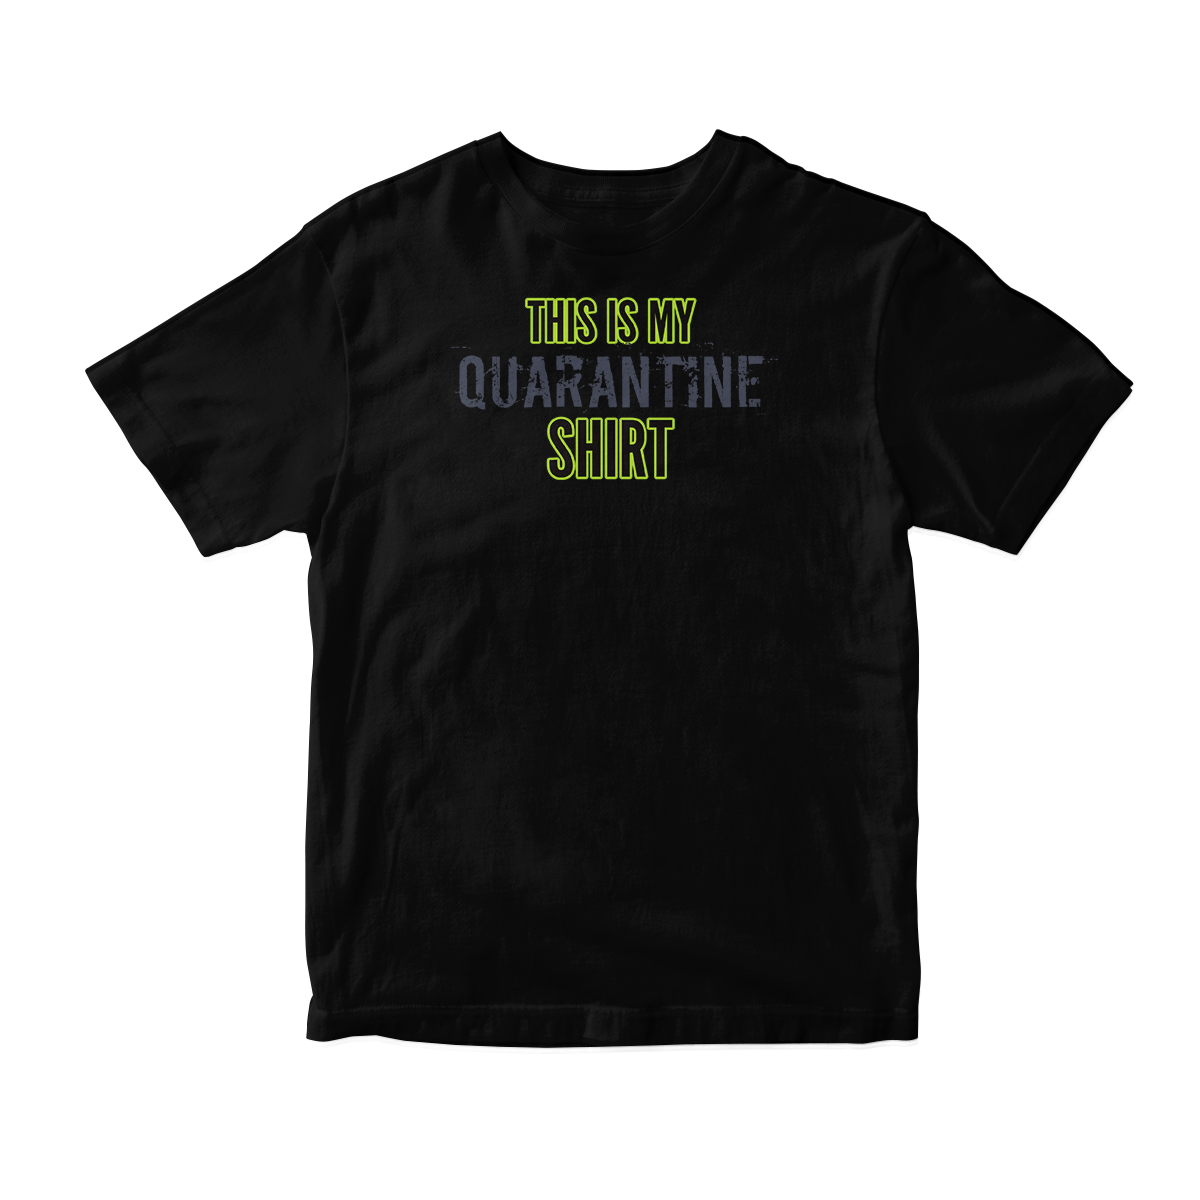 'Quarantine Shirt' in Neon 4 CW Short Sleeve Tee